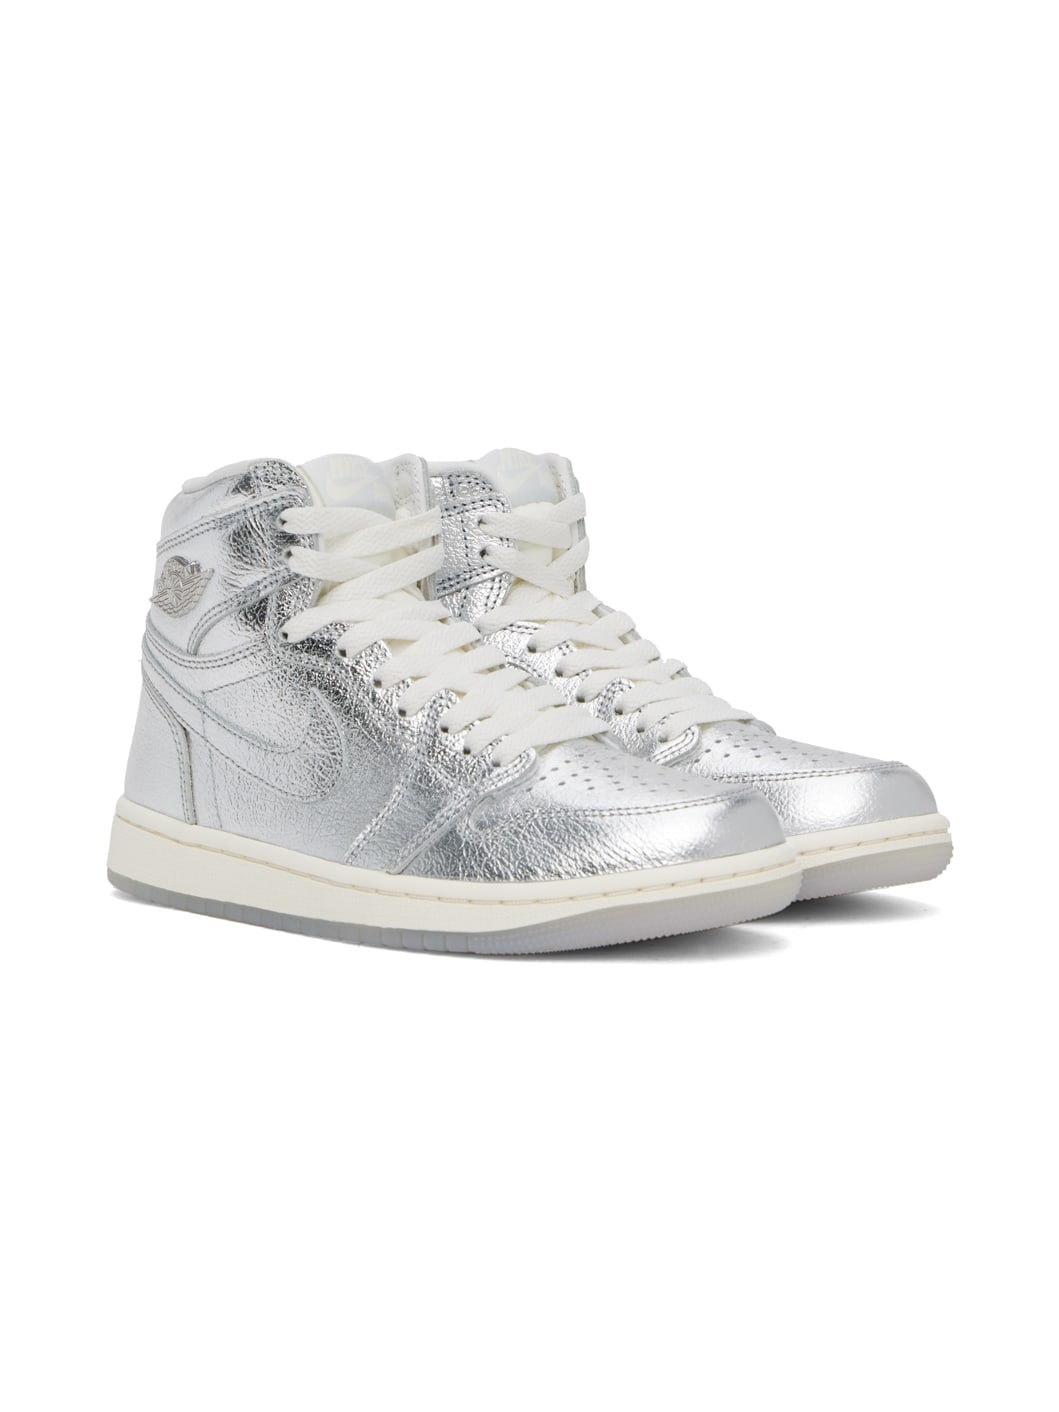 Silver Air Jordan 1 High OG Sneakers - 4